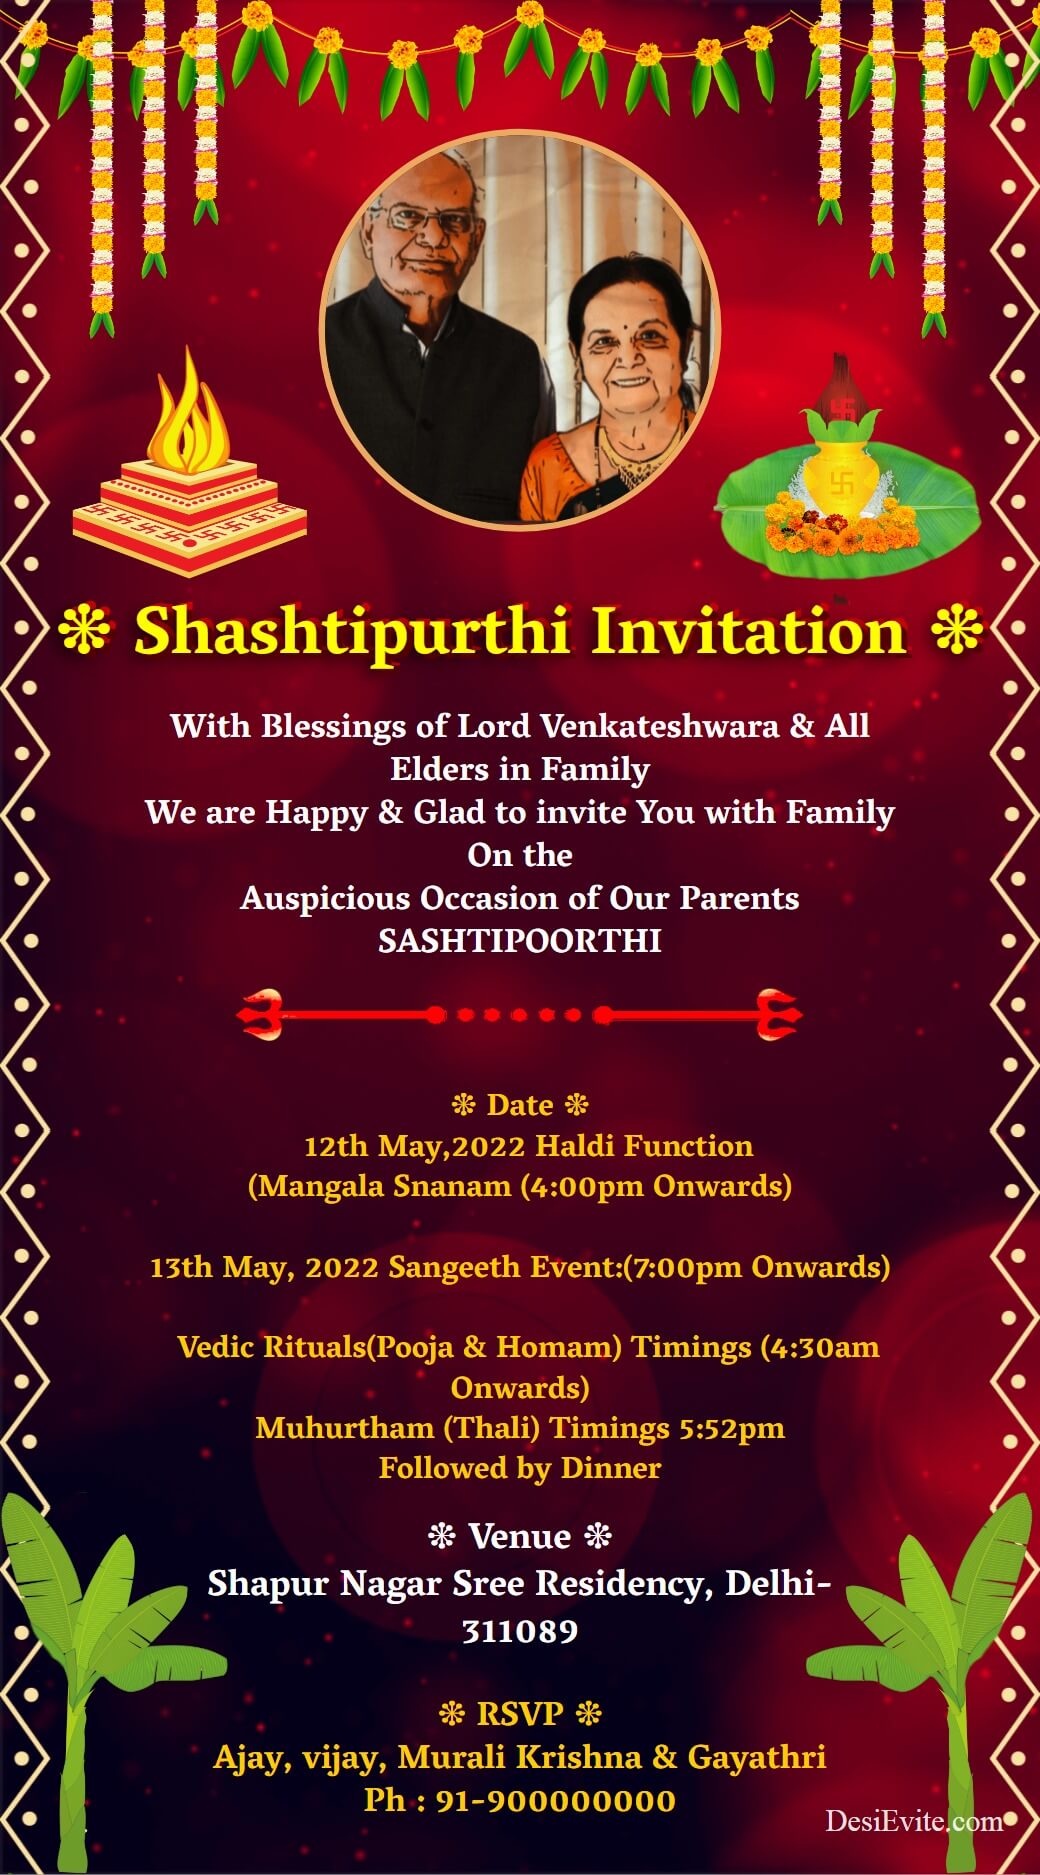 Traditional shashtipoorthi invitation card